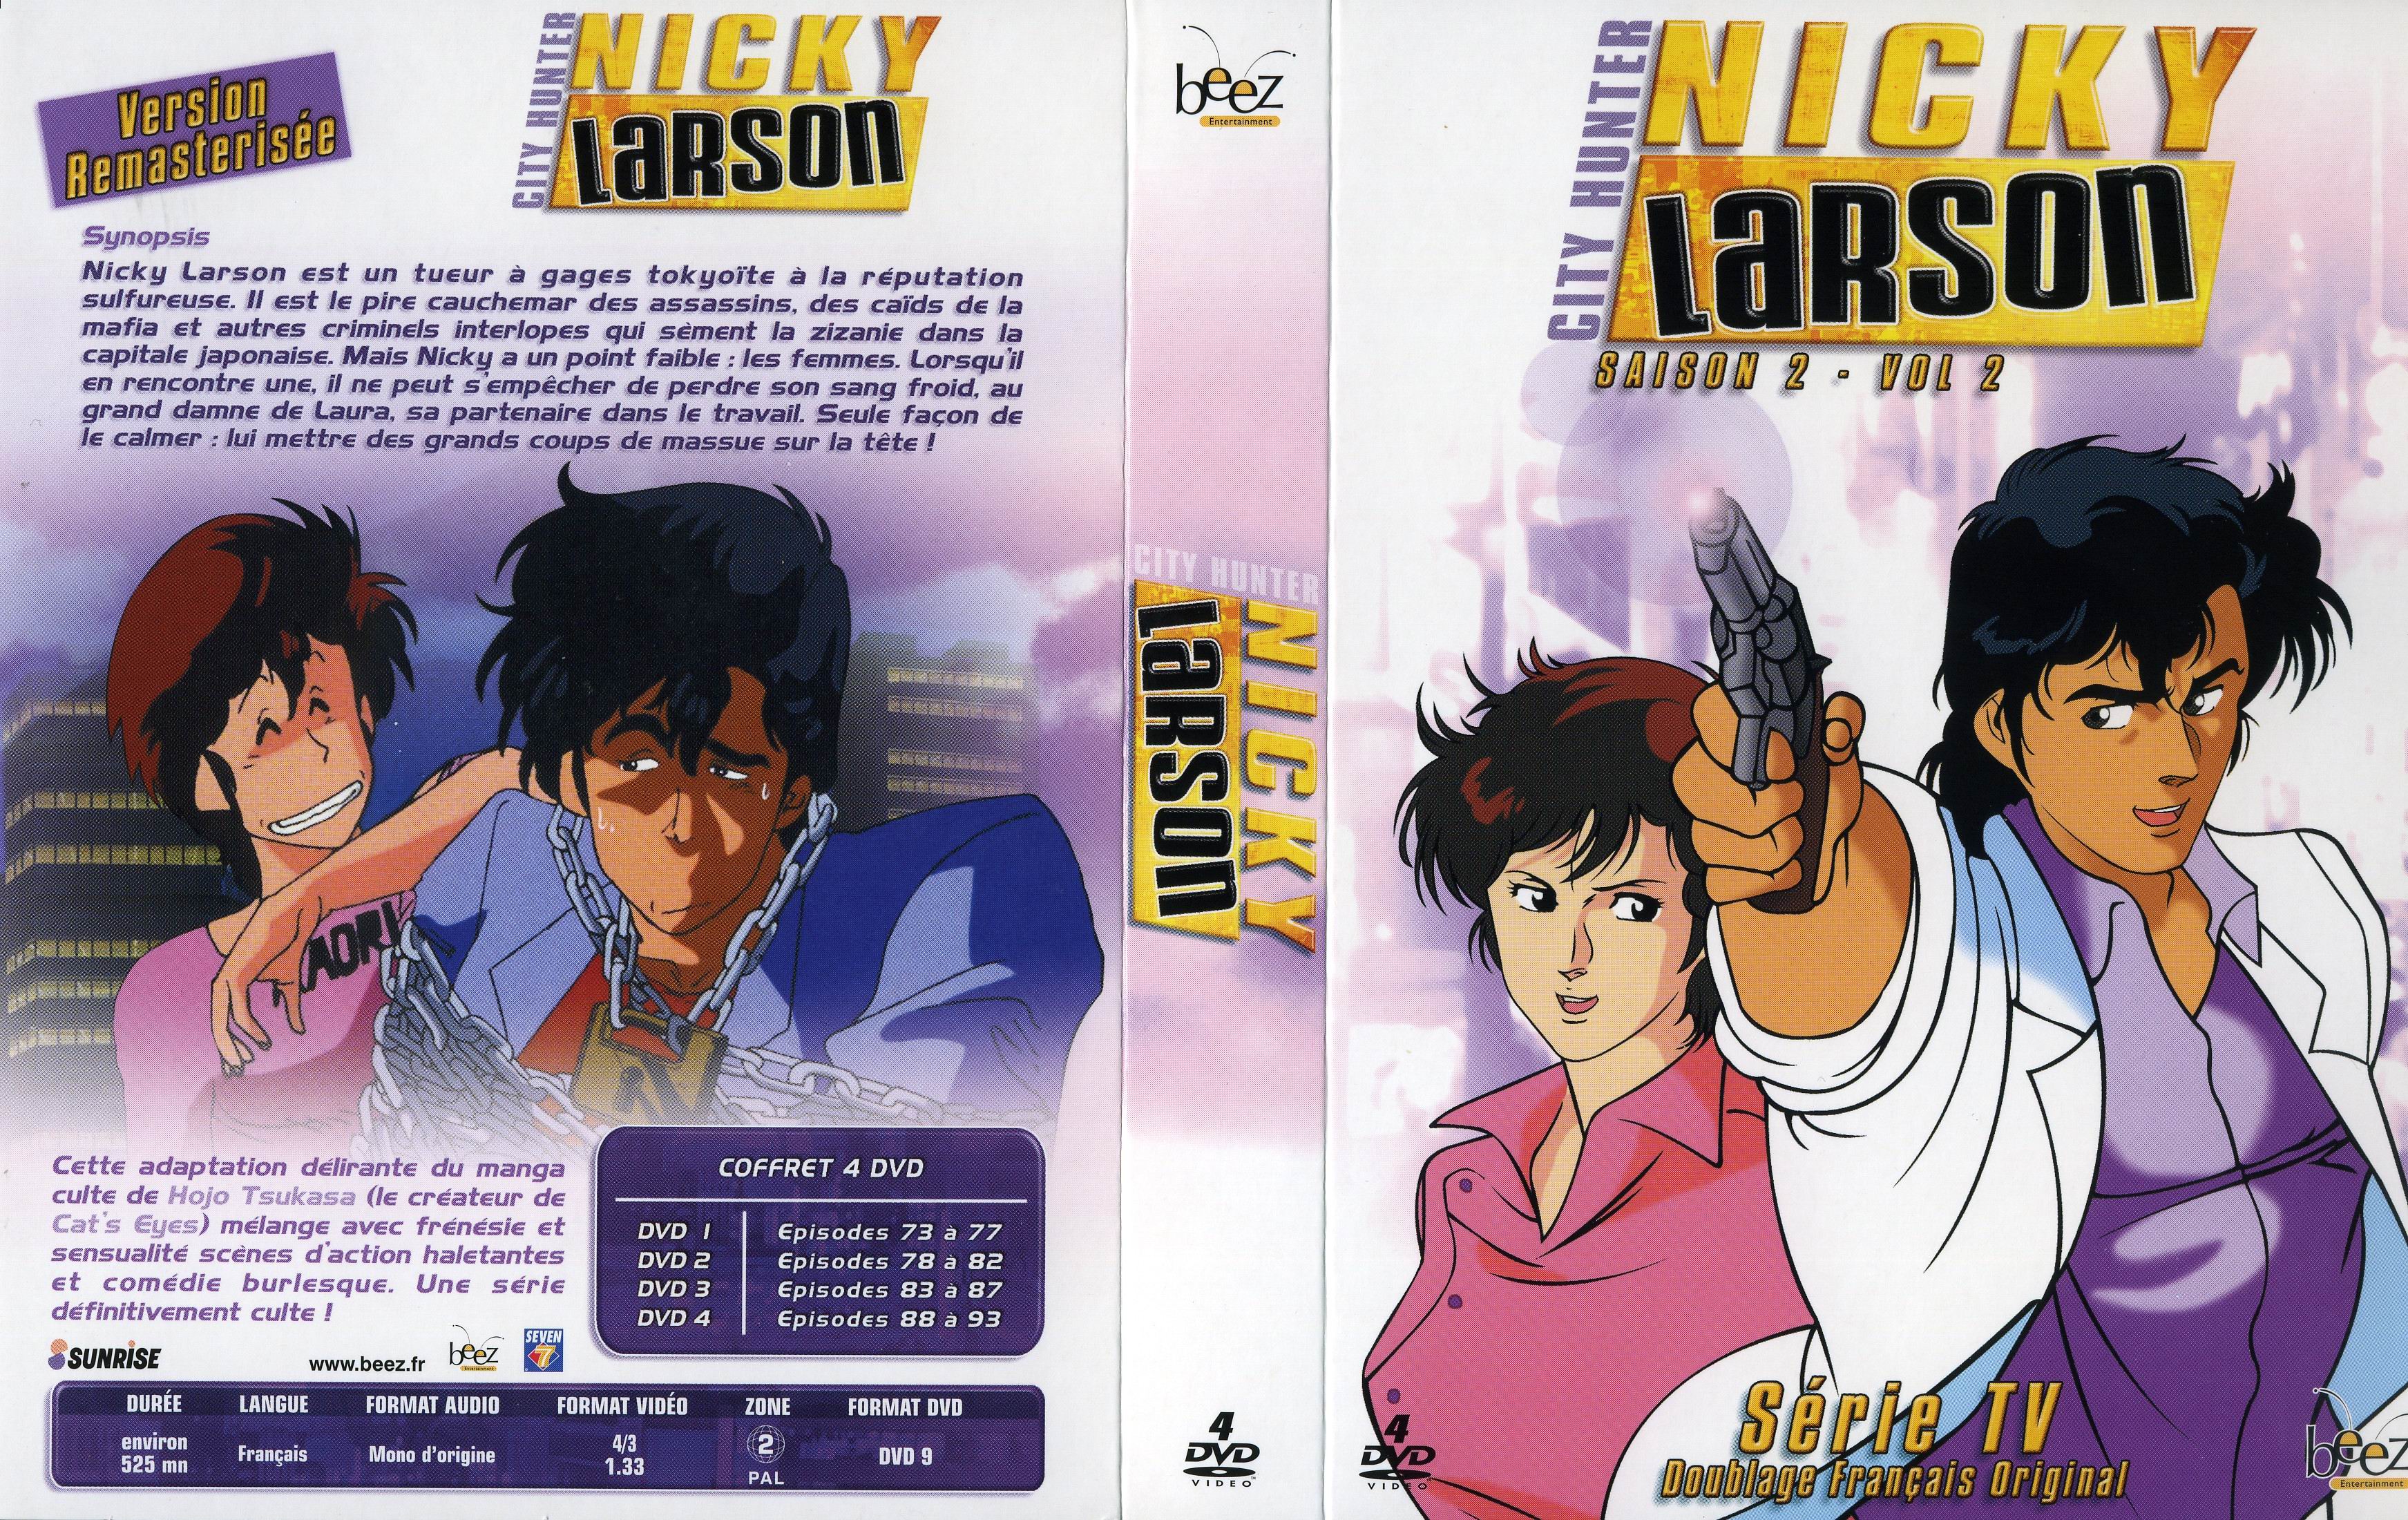 Jaquette DVD Nicky Larson Saison 2 vol 2